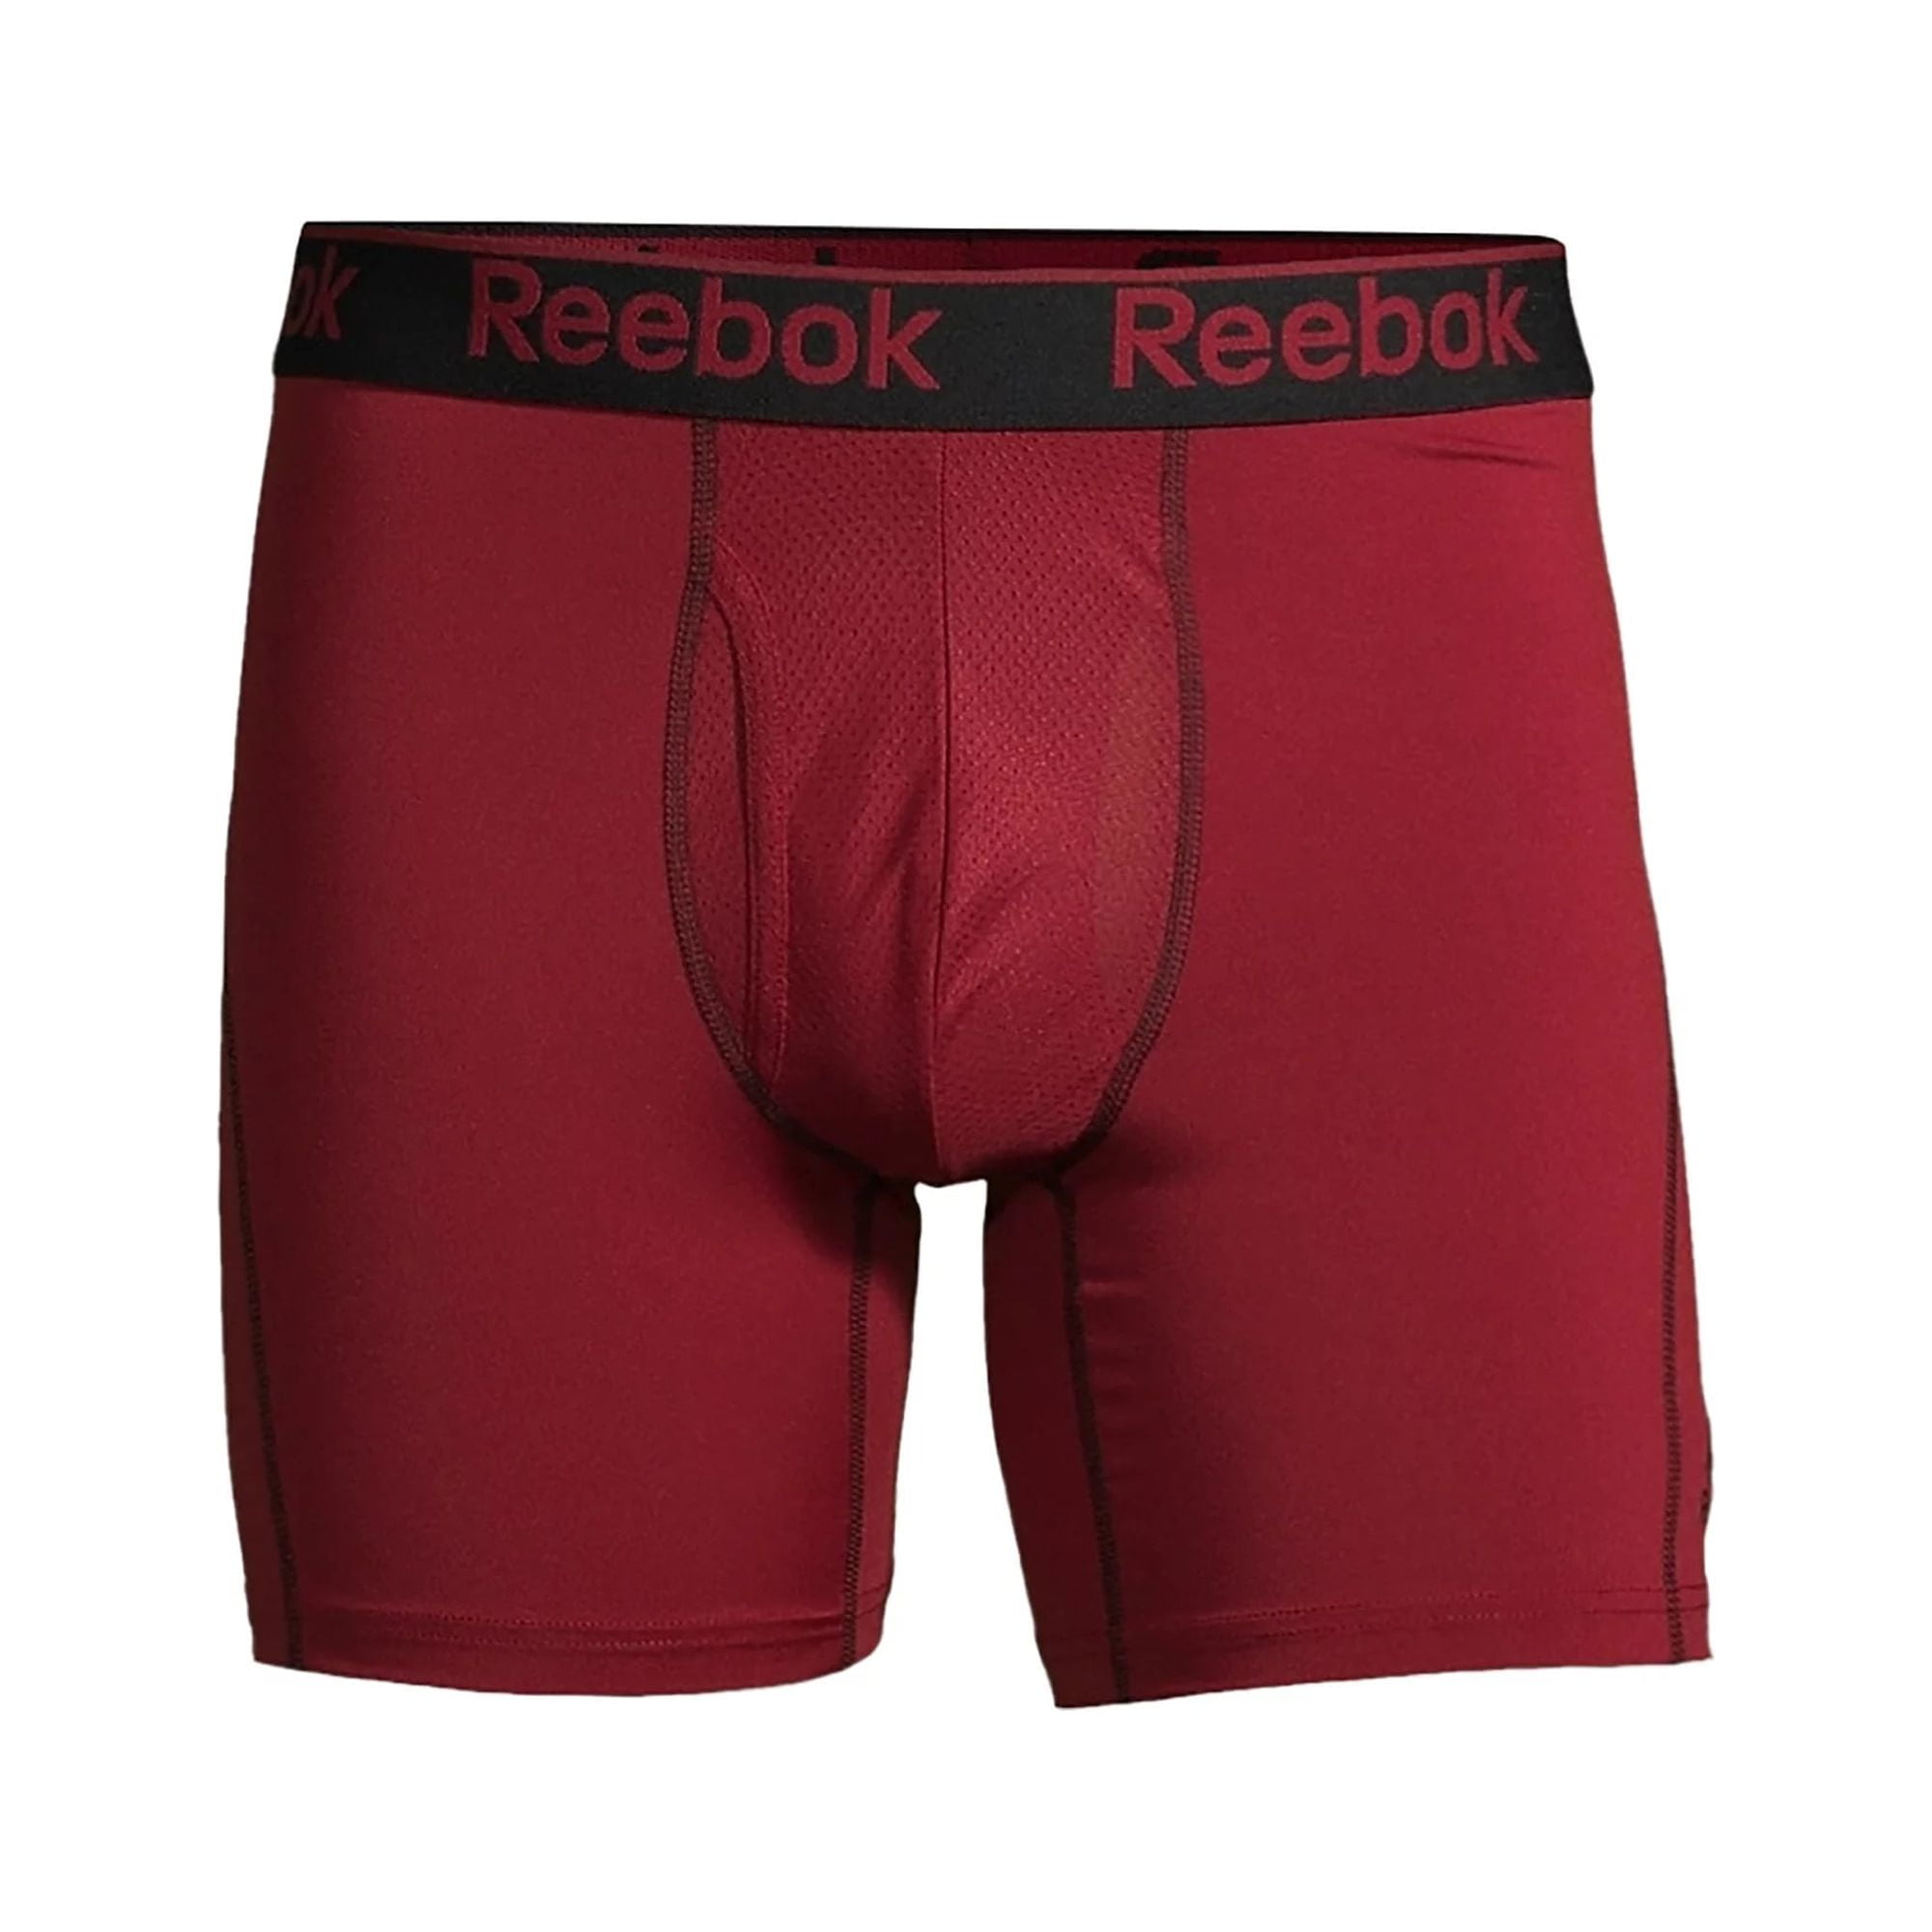 Reebok Men's Pro Series Performance Boxer Brief, 3 Pack 